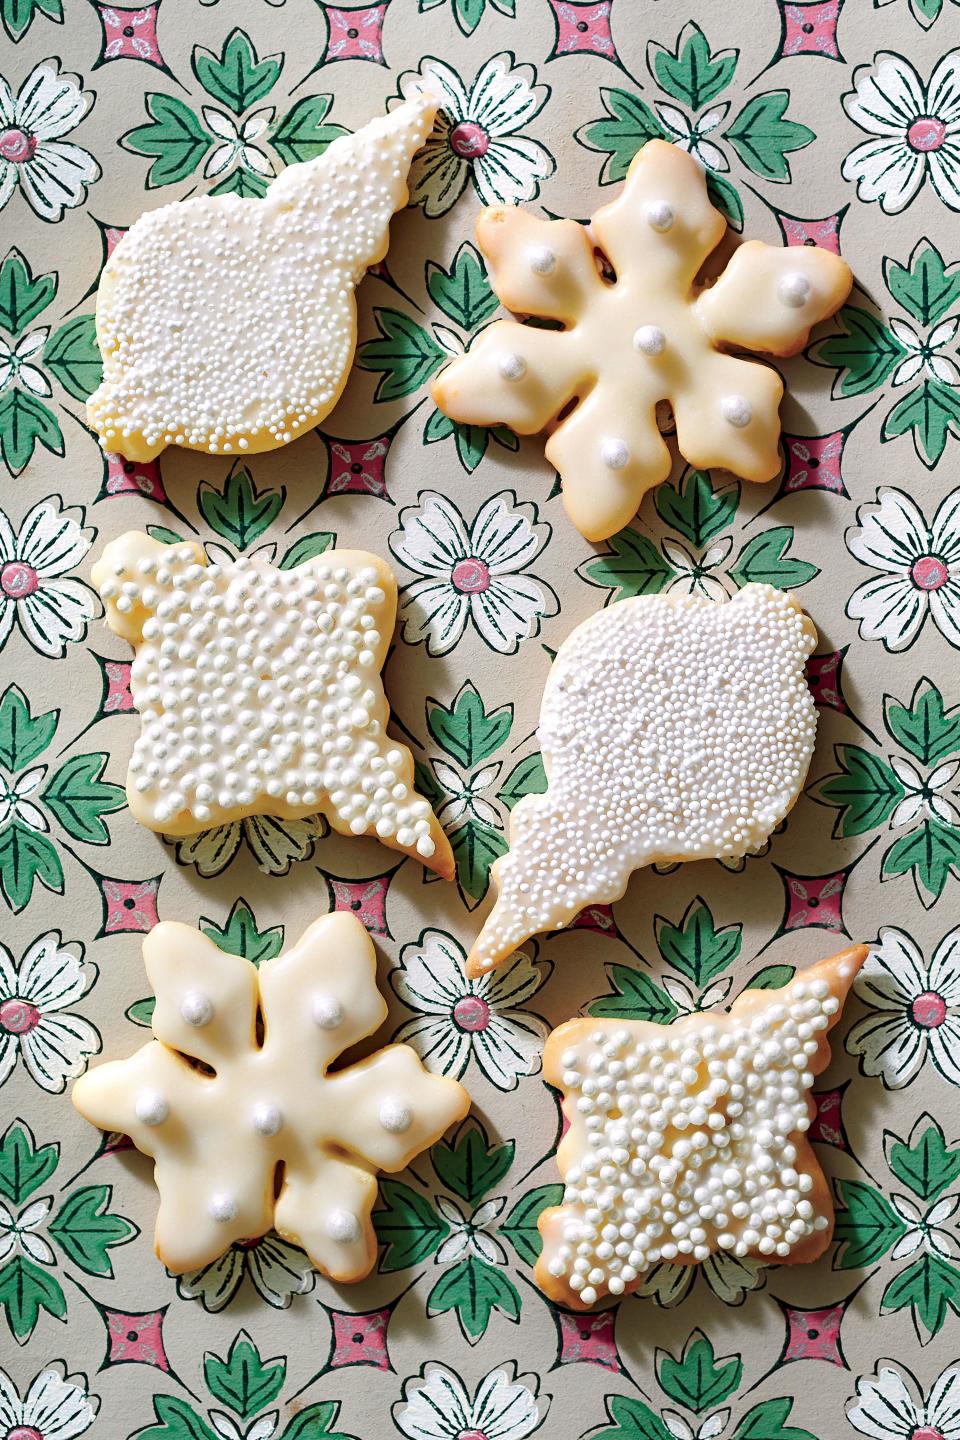 Decorate Sugar Cookies